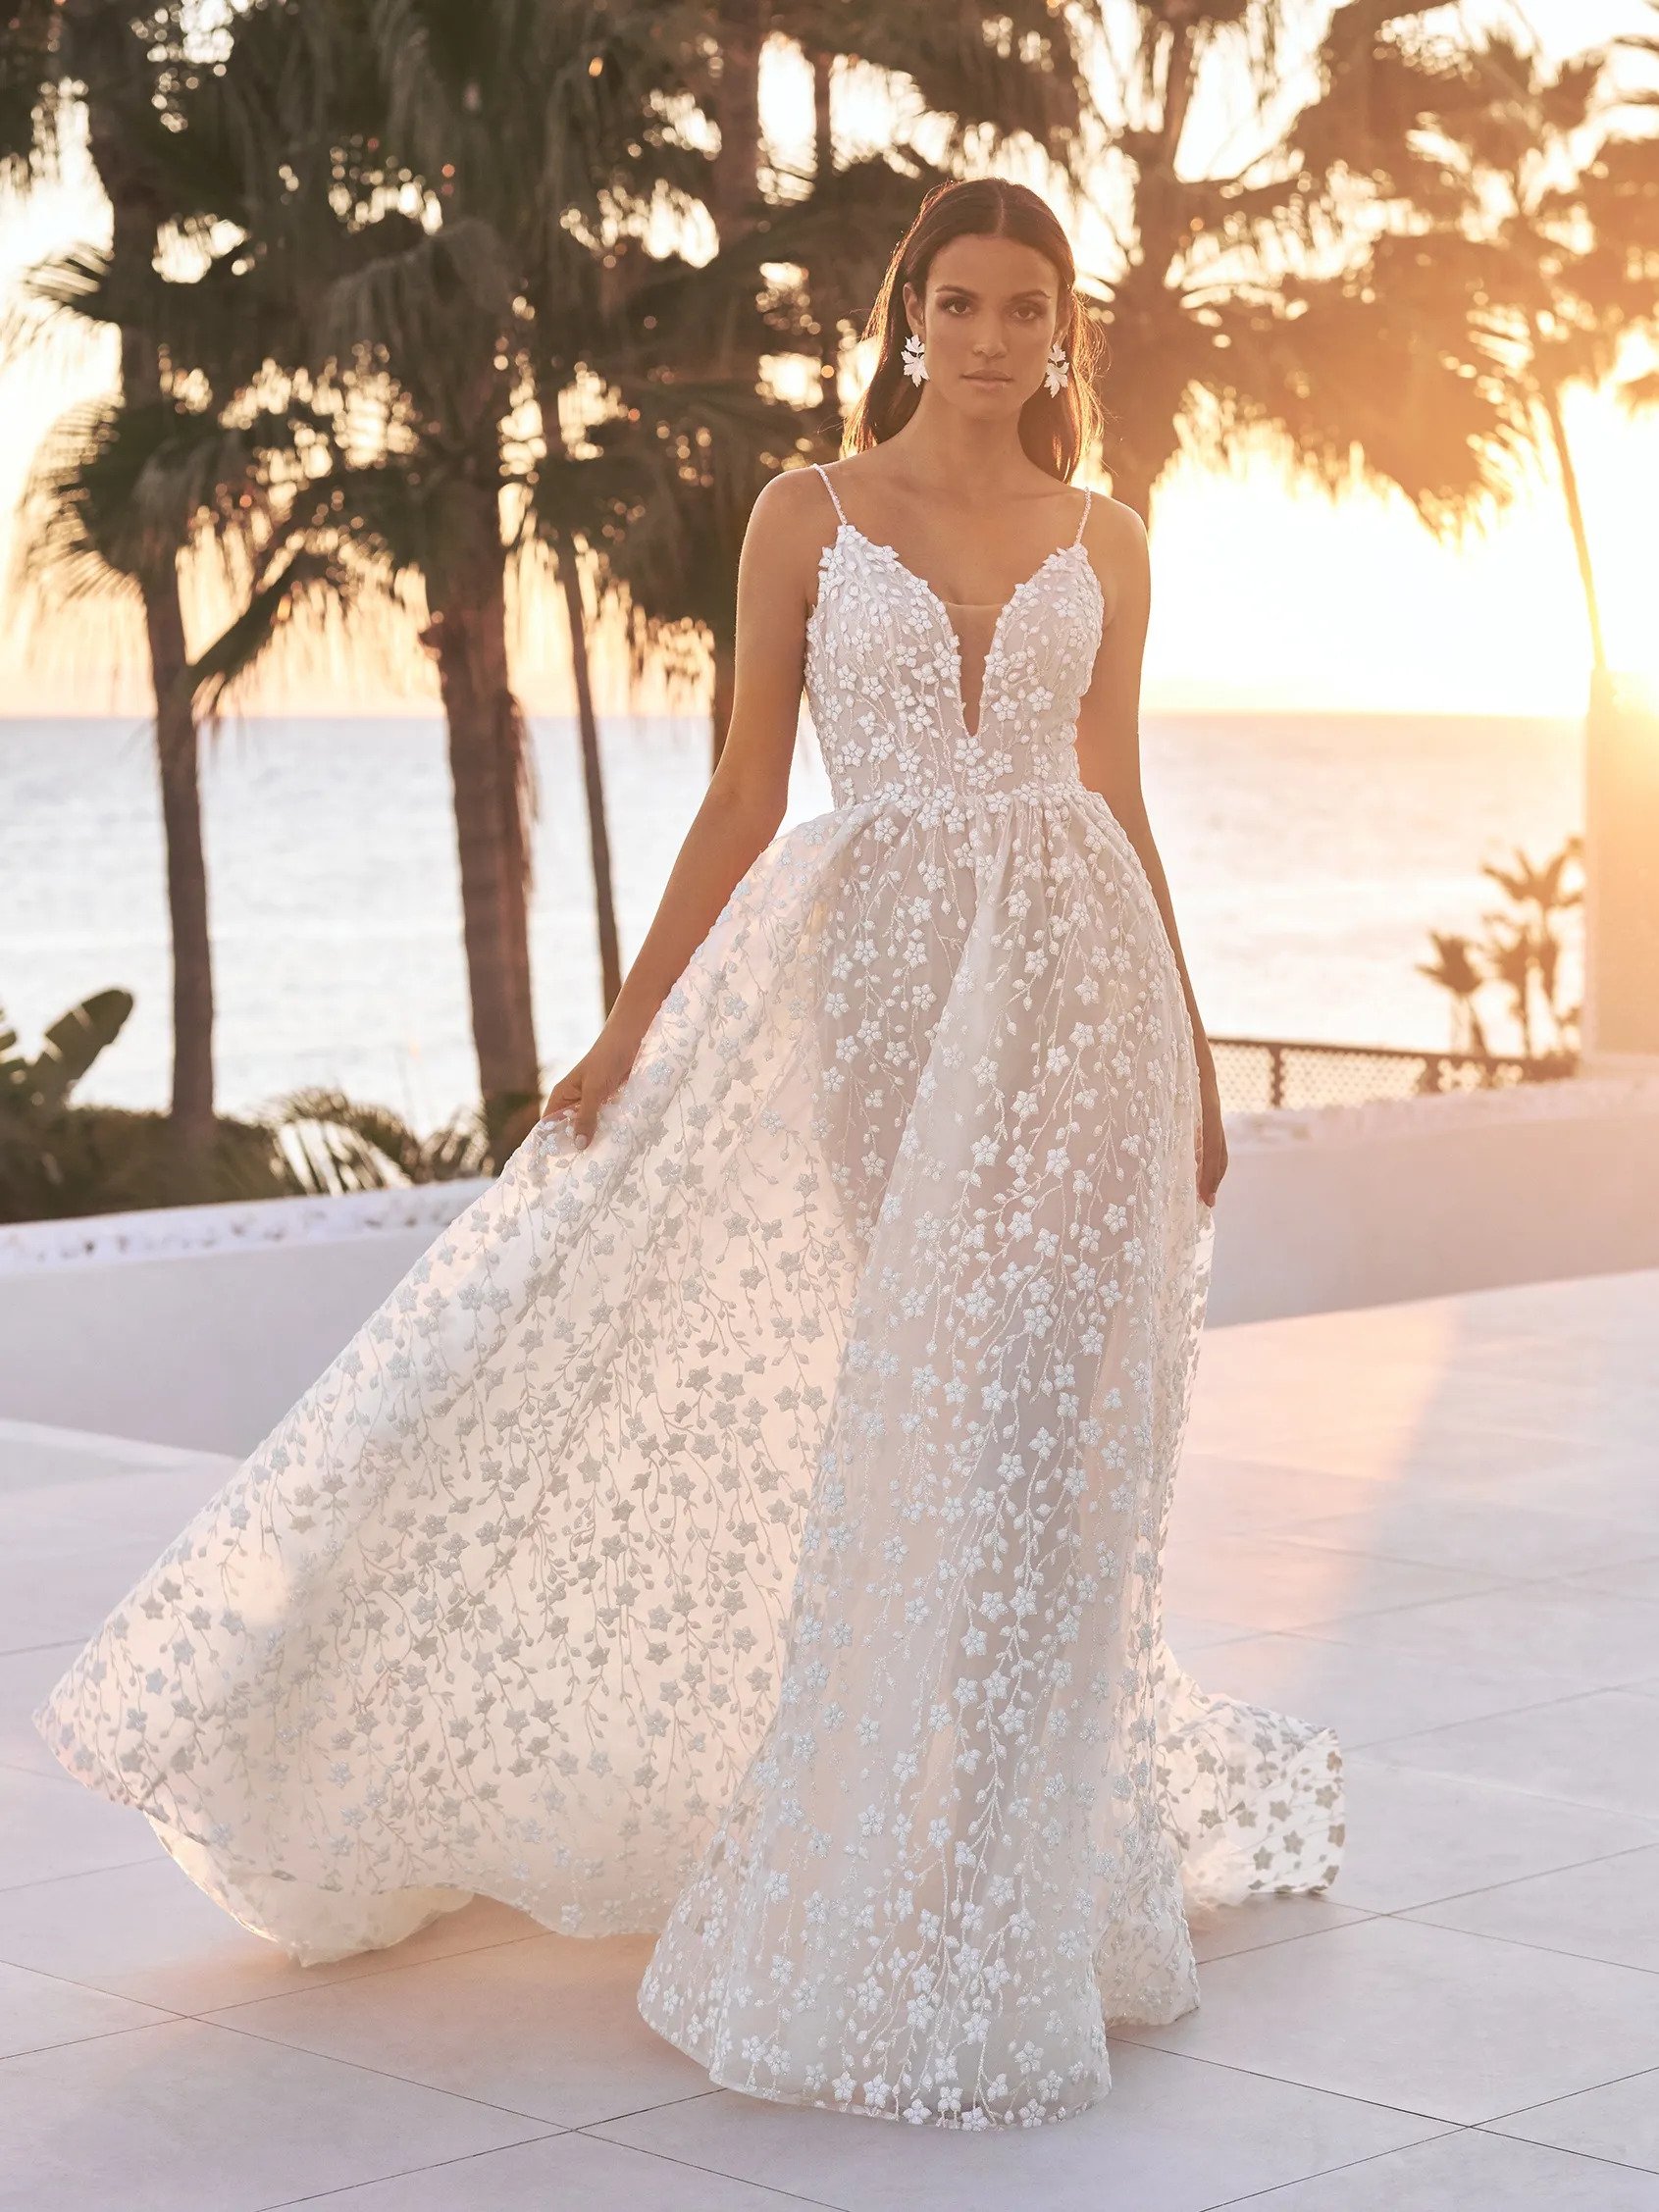 blanc-de-blanc-bridal-boutique-pittsburgh-dress-wedding-gown-yuki.jpg